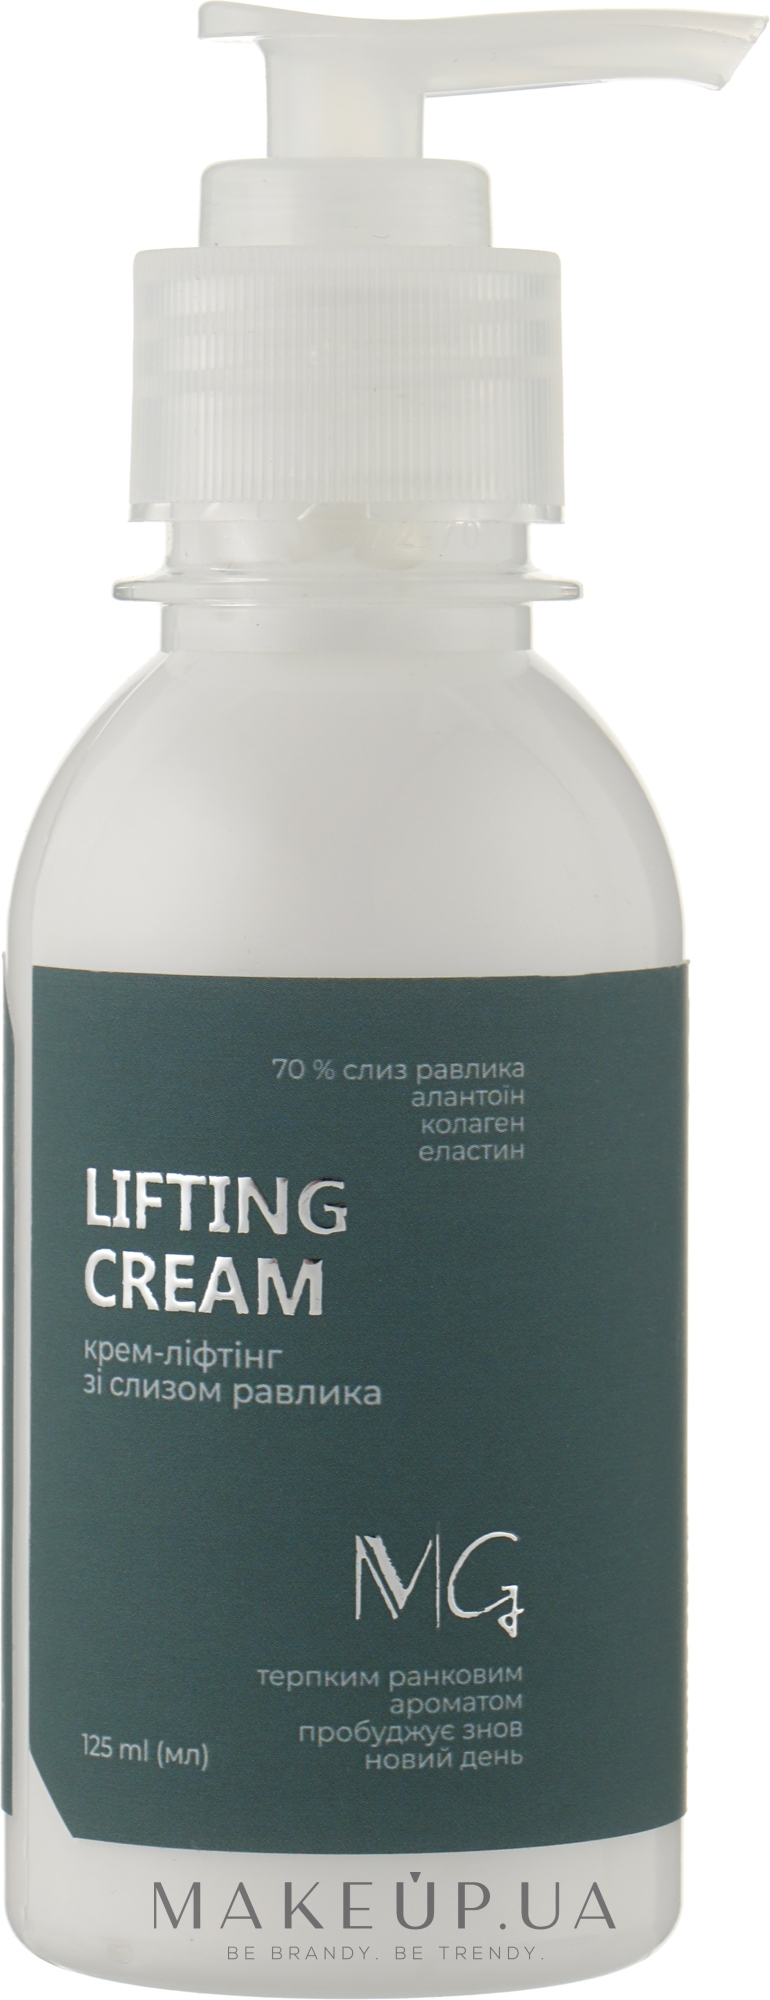 Крем-лифтинг со слизью улитки - MG Lifting Cream  — фото 125ml